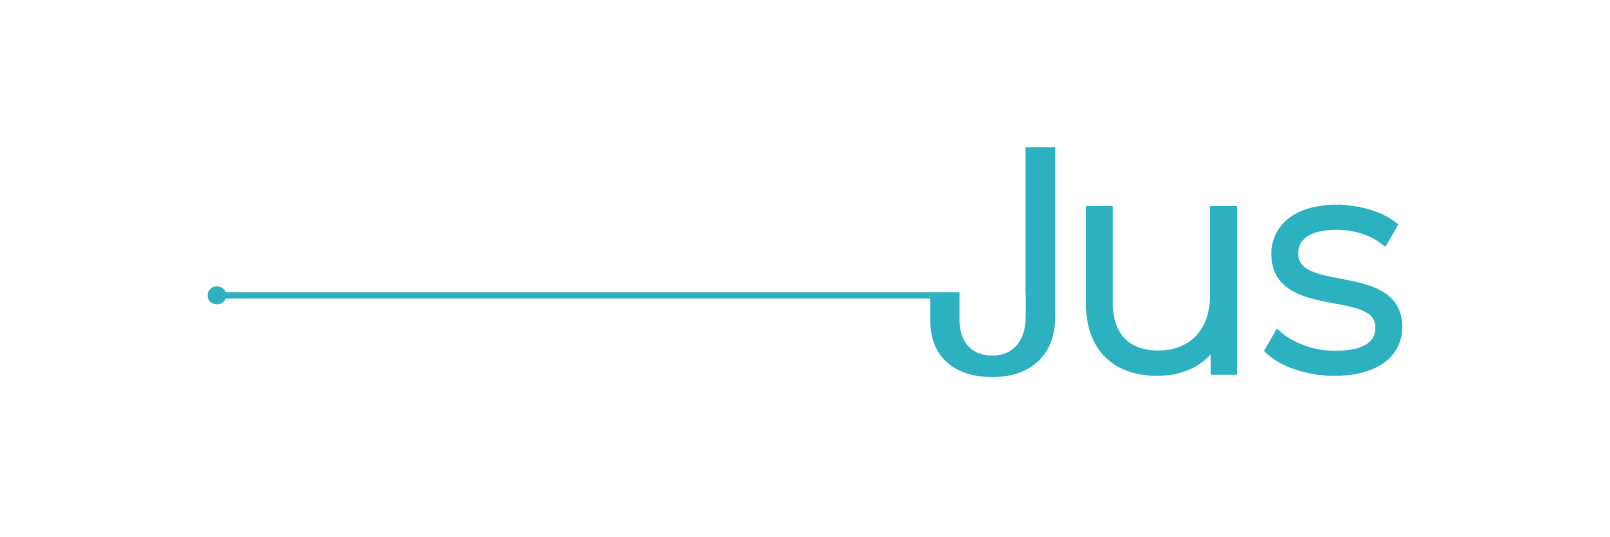 Connect-Jus - Conectando a Justiça